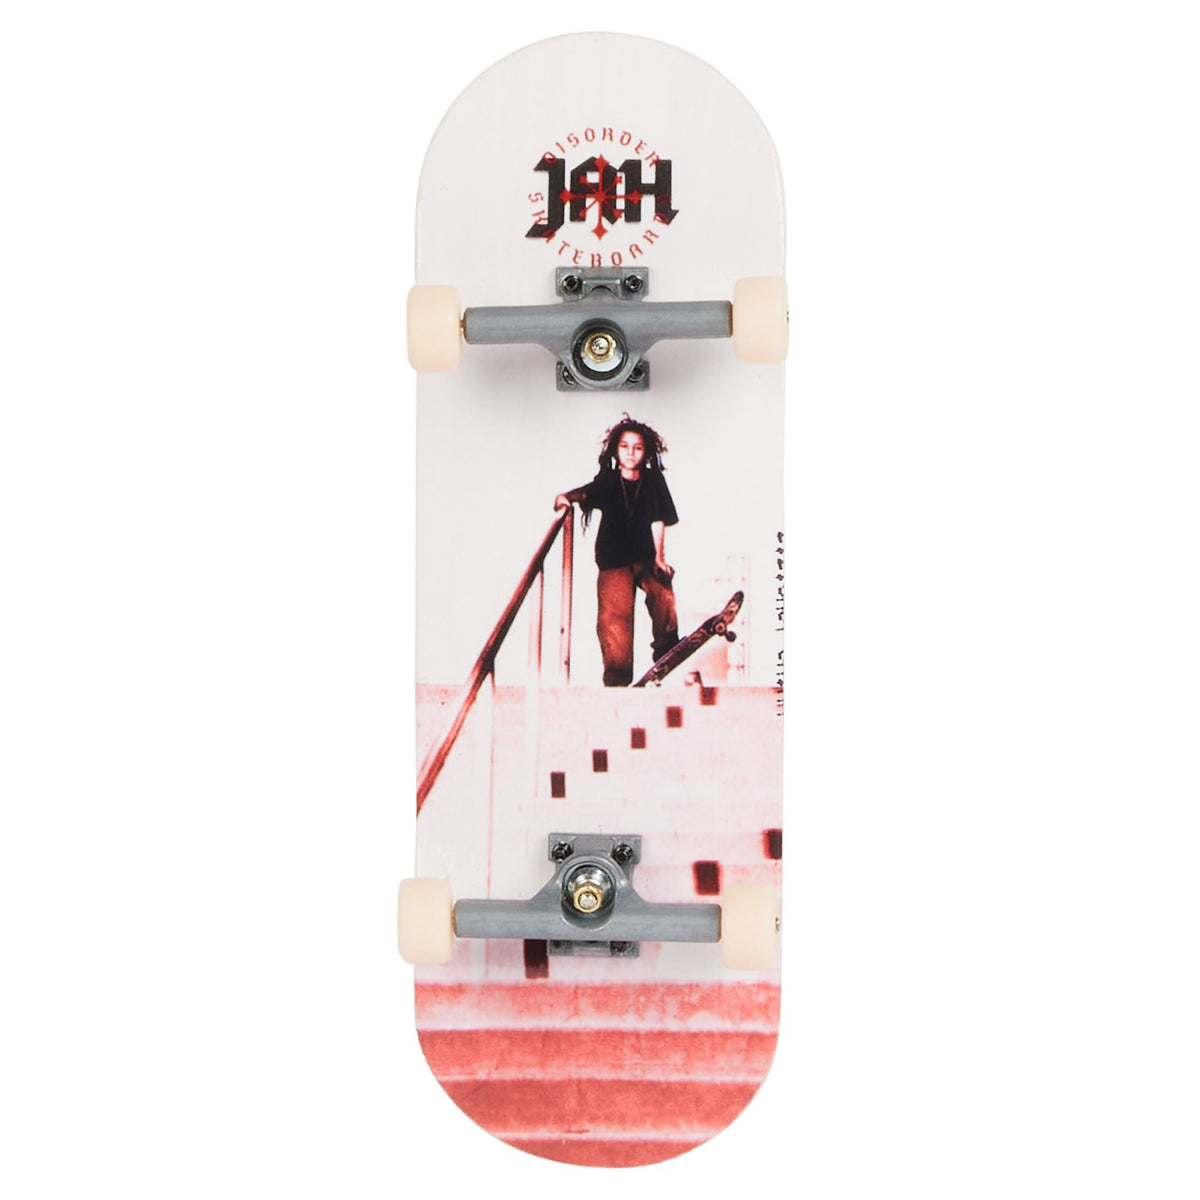 Tech Deck Performance Wood Fingerboard - JT Skate